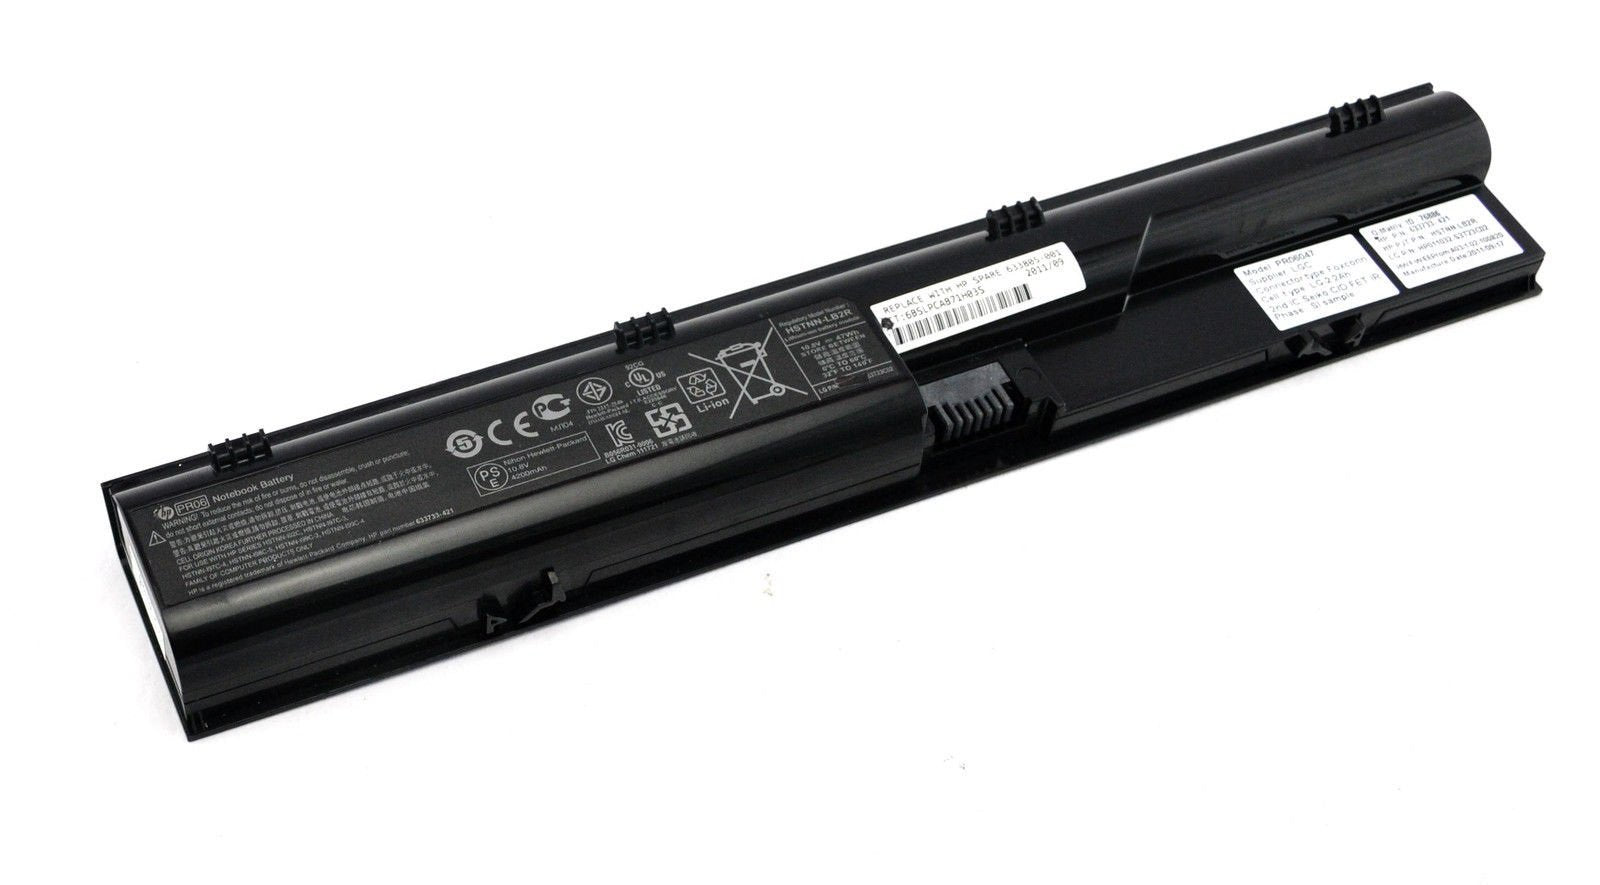 Original PR06 HSTNN-IB2R Laptop Battery for HP Probook 4330s 4331s 4430s 4431s 4435s 4436s 4440s 4540s Tablet 10.8V